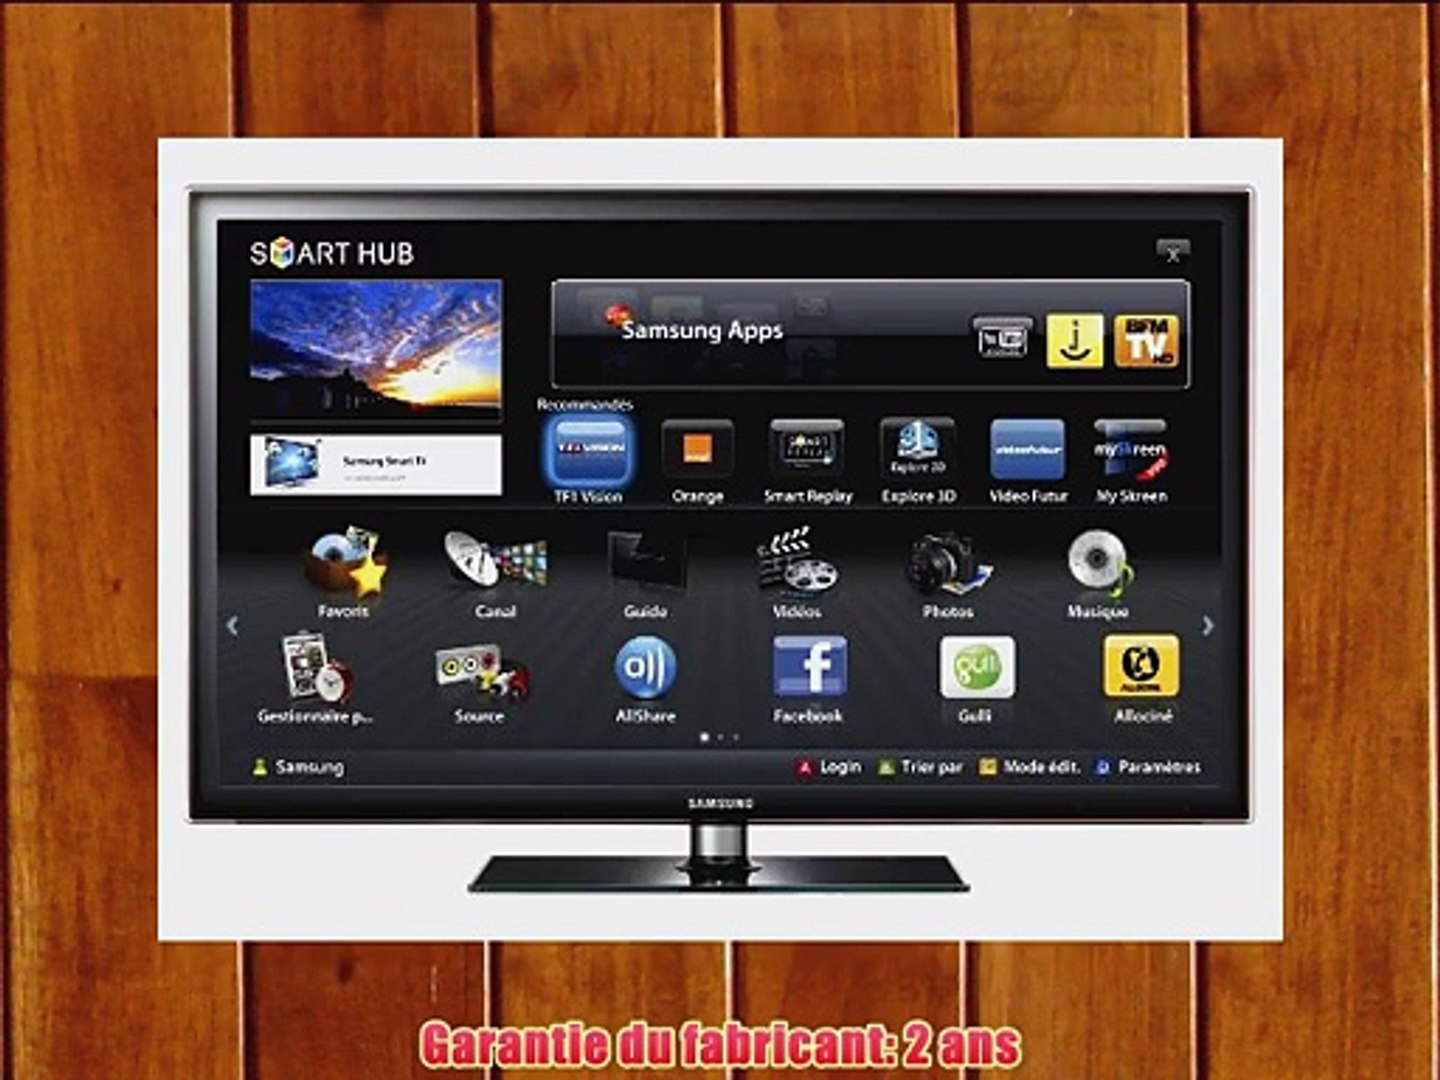 Samsung UE46D5700 TV LCD 46 (116 cm) LED HD TV 1080p Smart TV 100 Hz 4 HDMI  2 USB - video Dailymotion